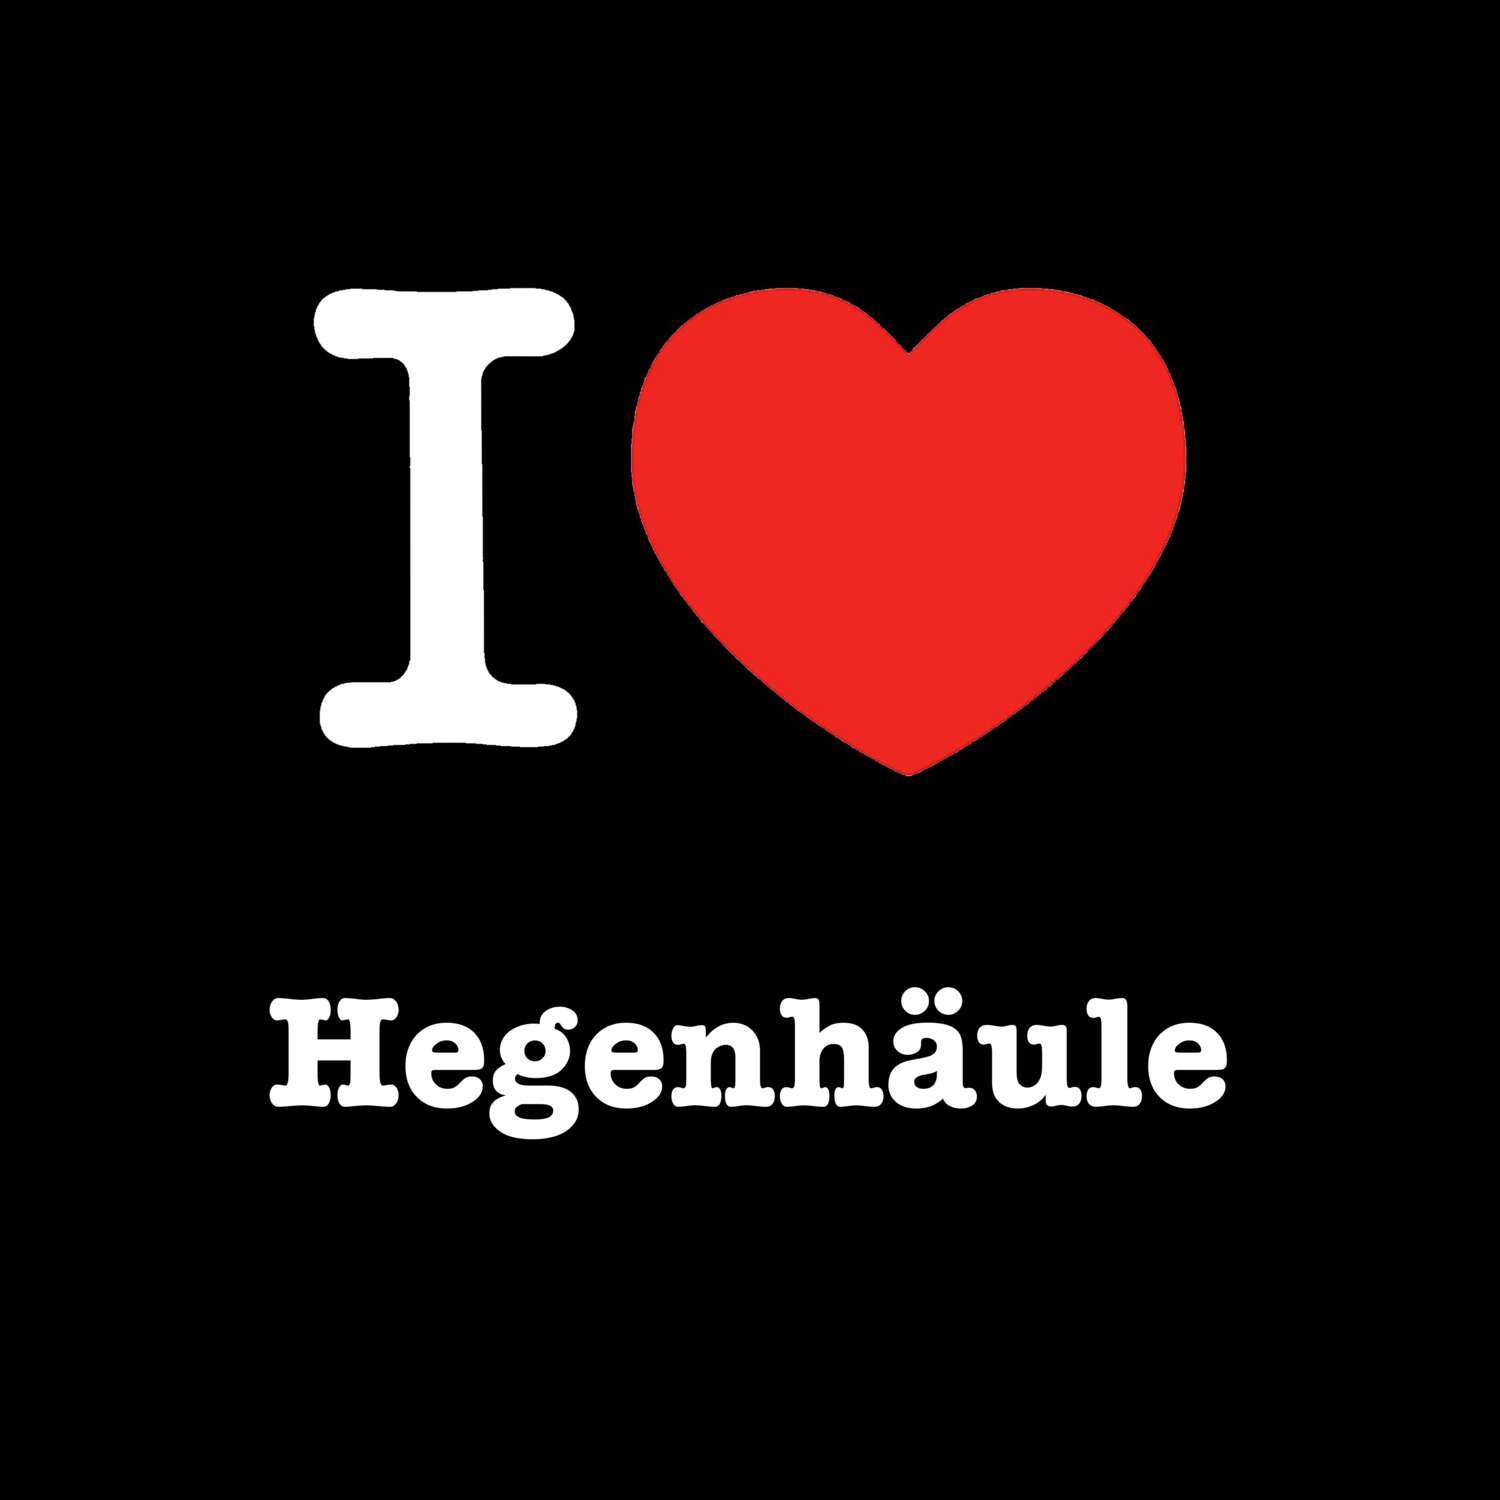 Hegenhäule T-Shirt »I love«